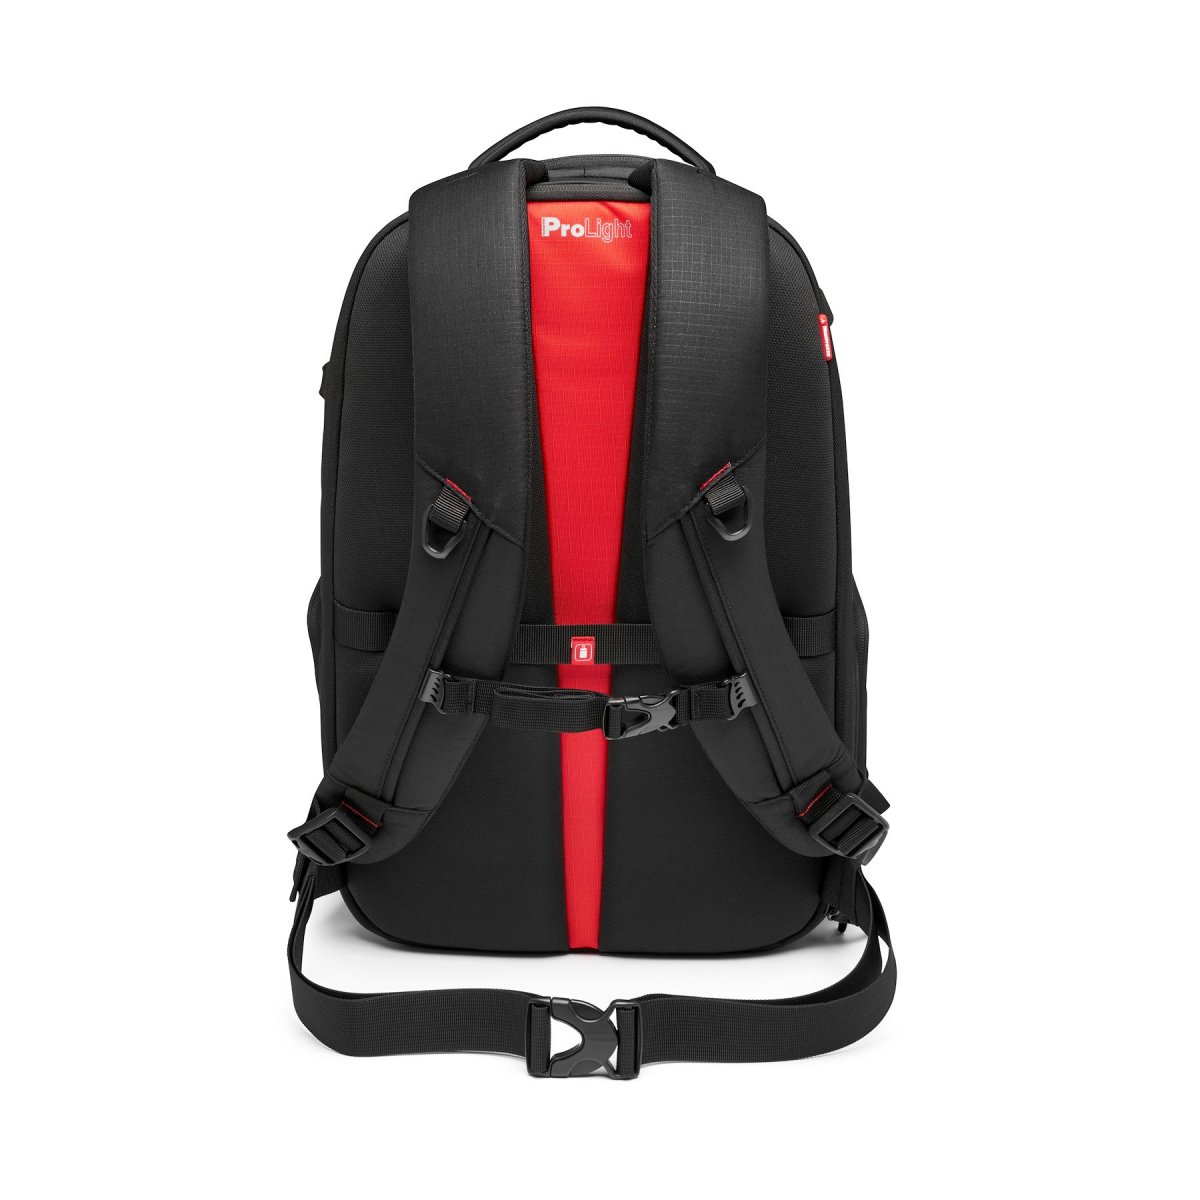 Fotobatoh Manfrotto Pro Light backpack RedBee-310 pro DSLRc nebo dron DJI Mavic series zezadu